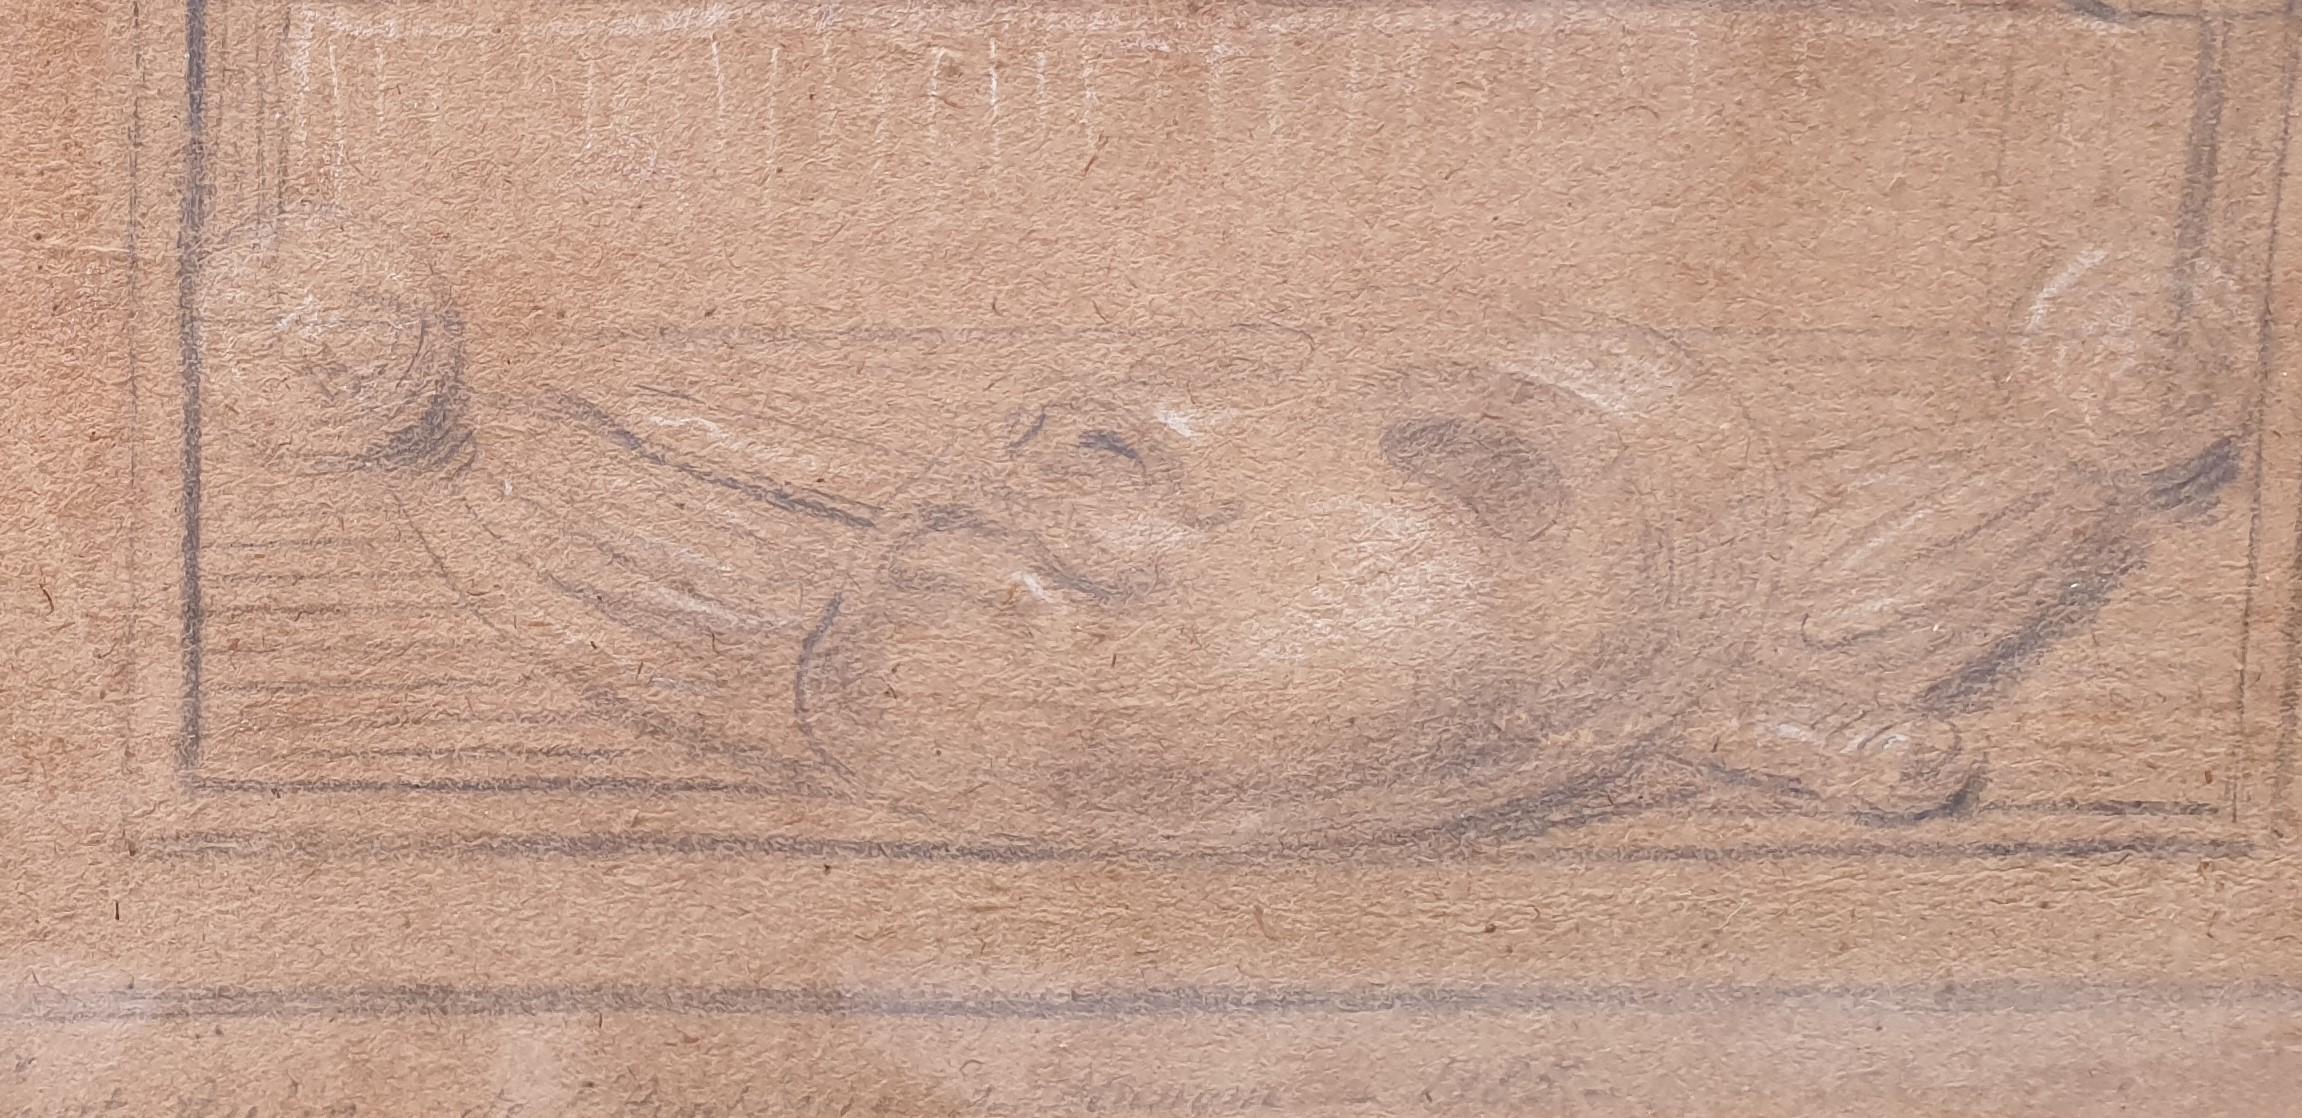 French school Drawing 18th Portrait Ténor SAINT AUBIN three chalks Paris Opéra  For Sale 2